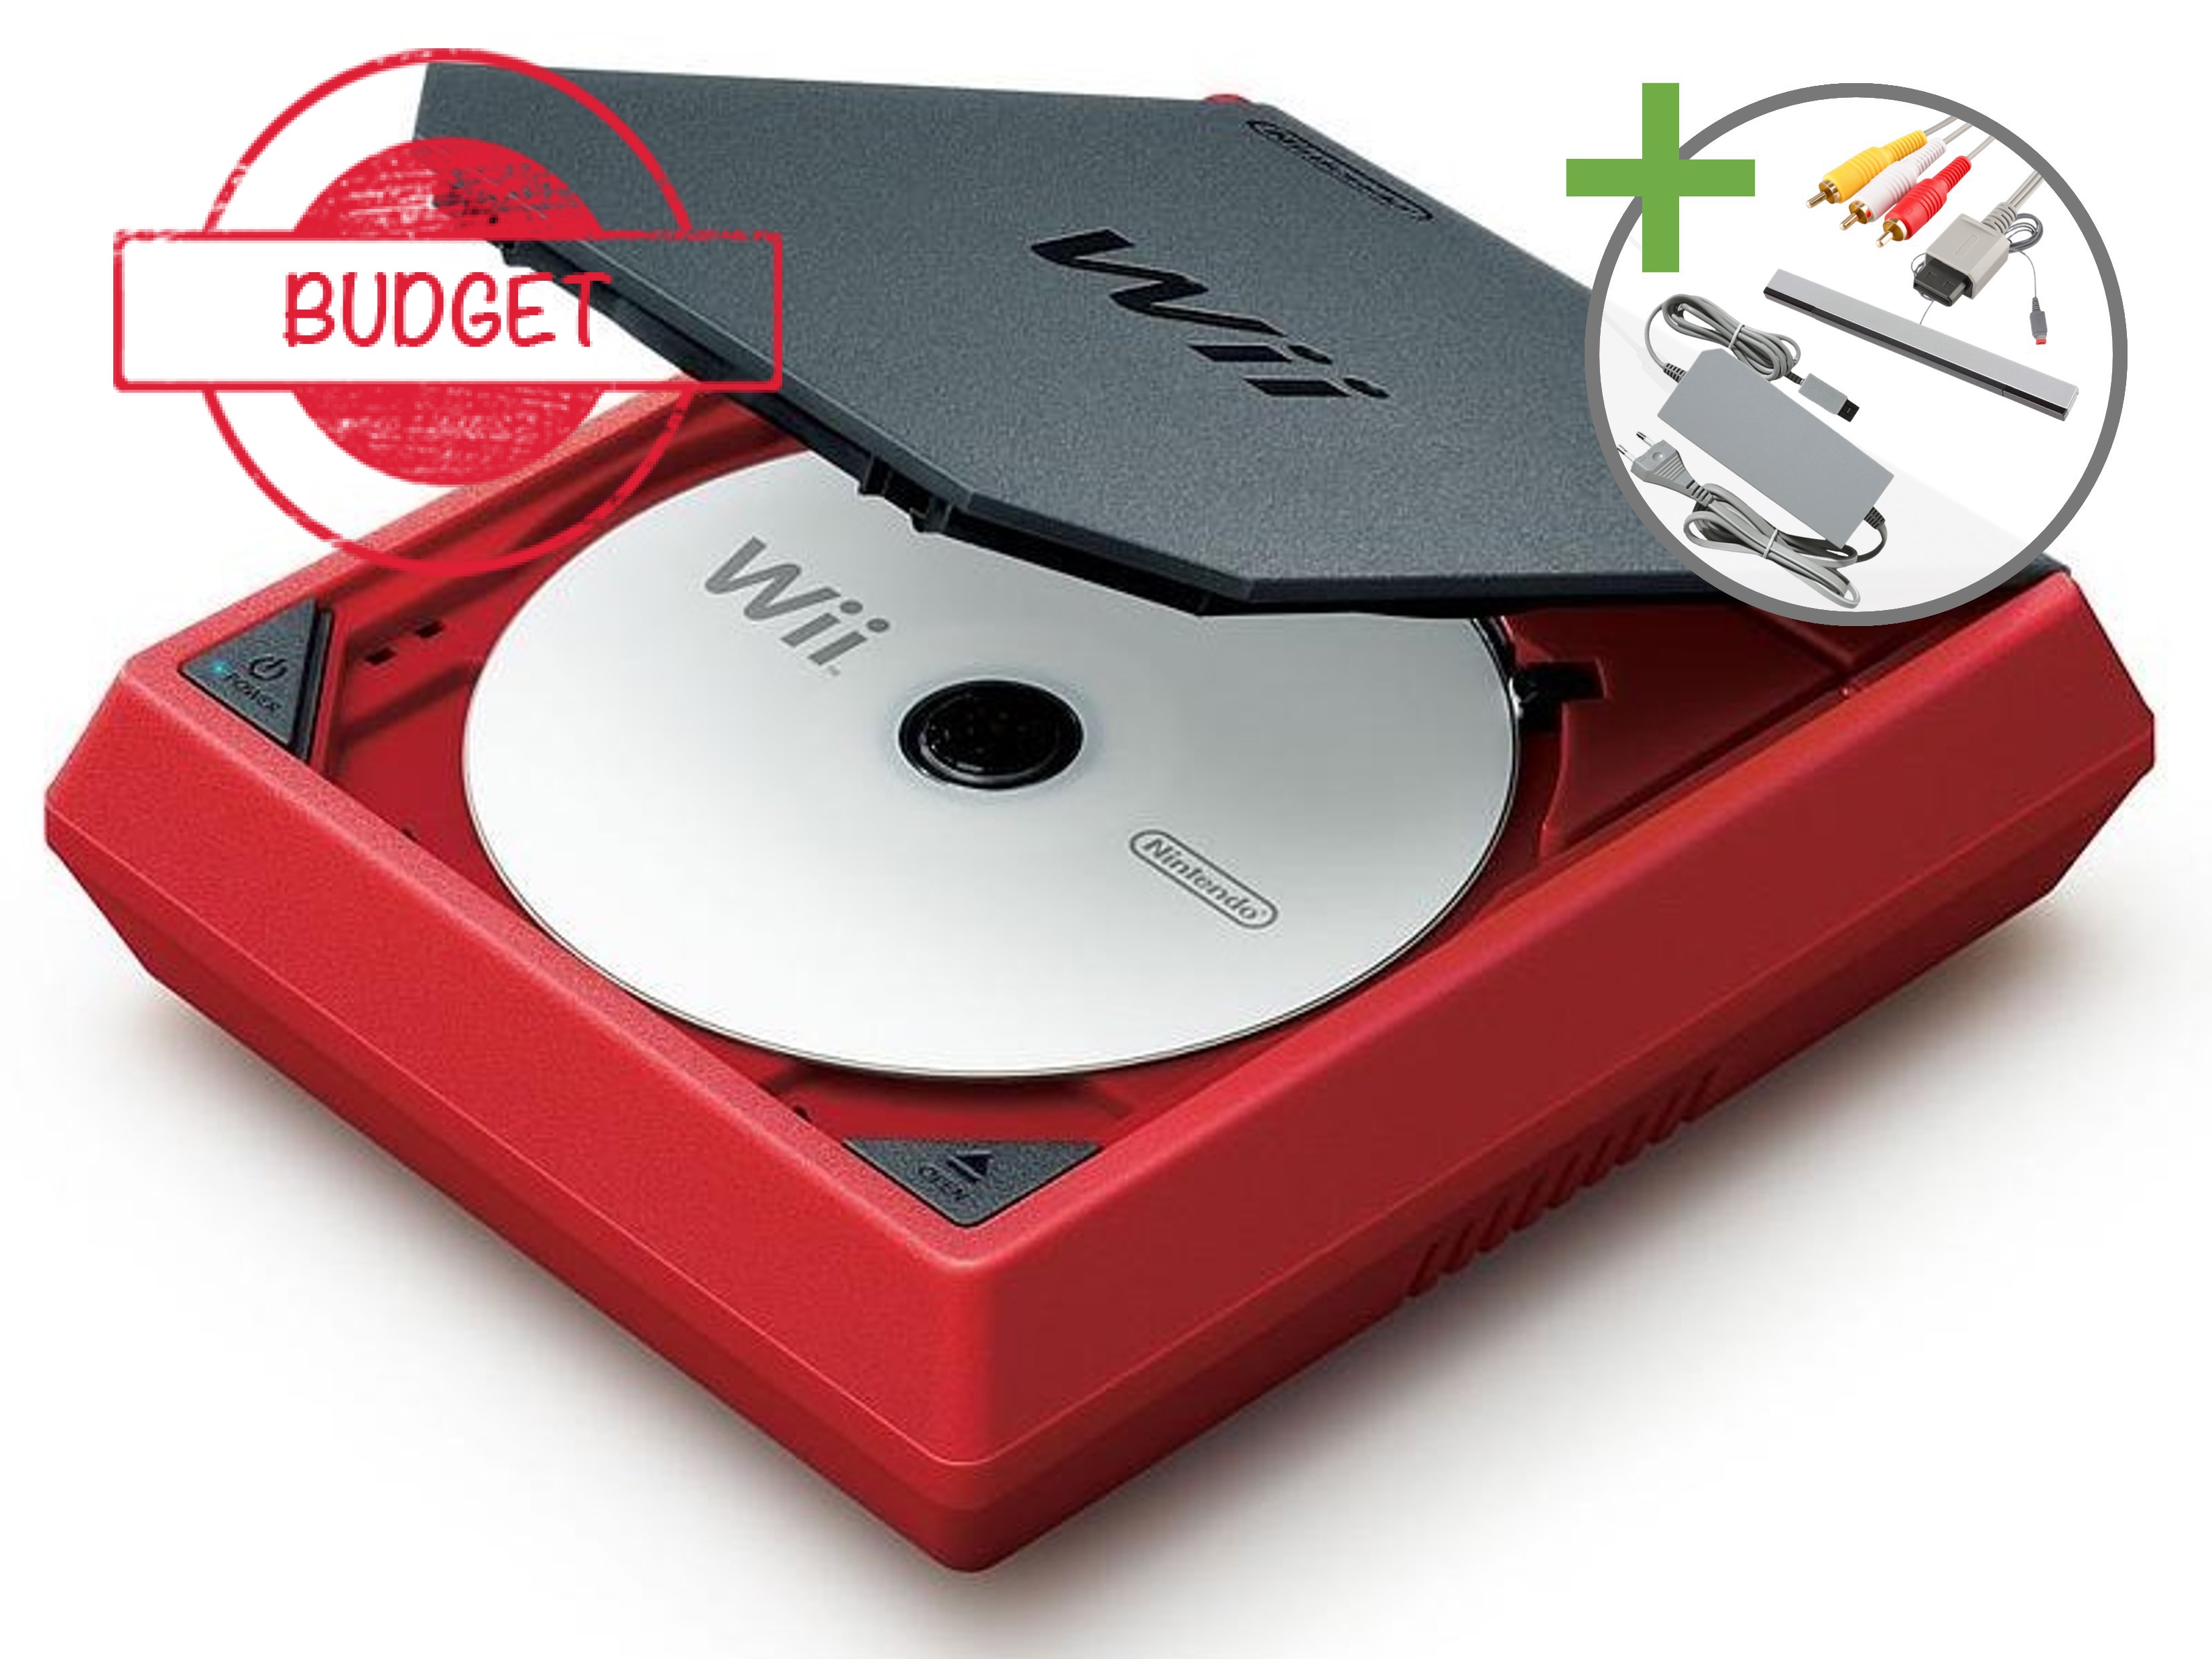 Nintendo Wii Mini Starter Pack - Motion Plus Edition - Budget - Wii Hardware - 2